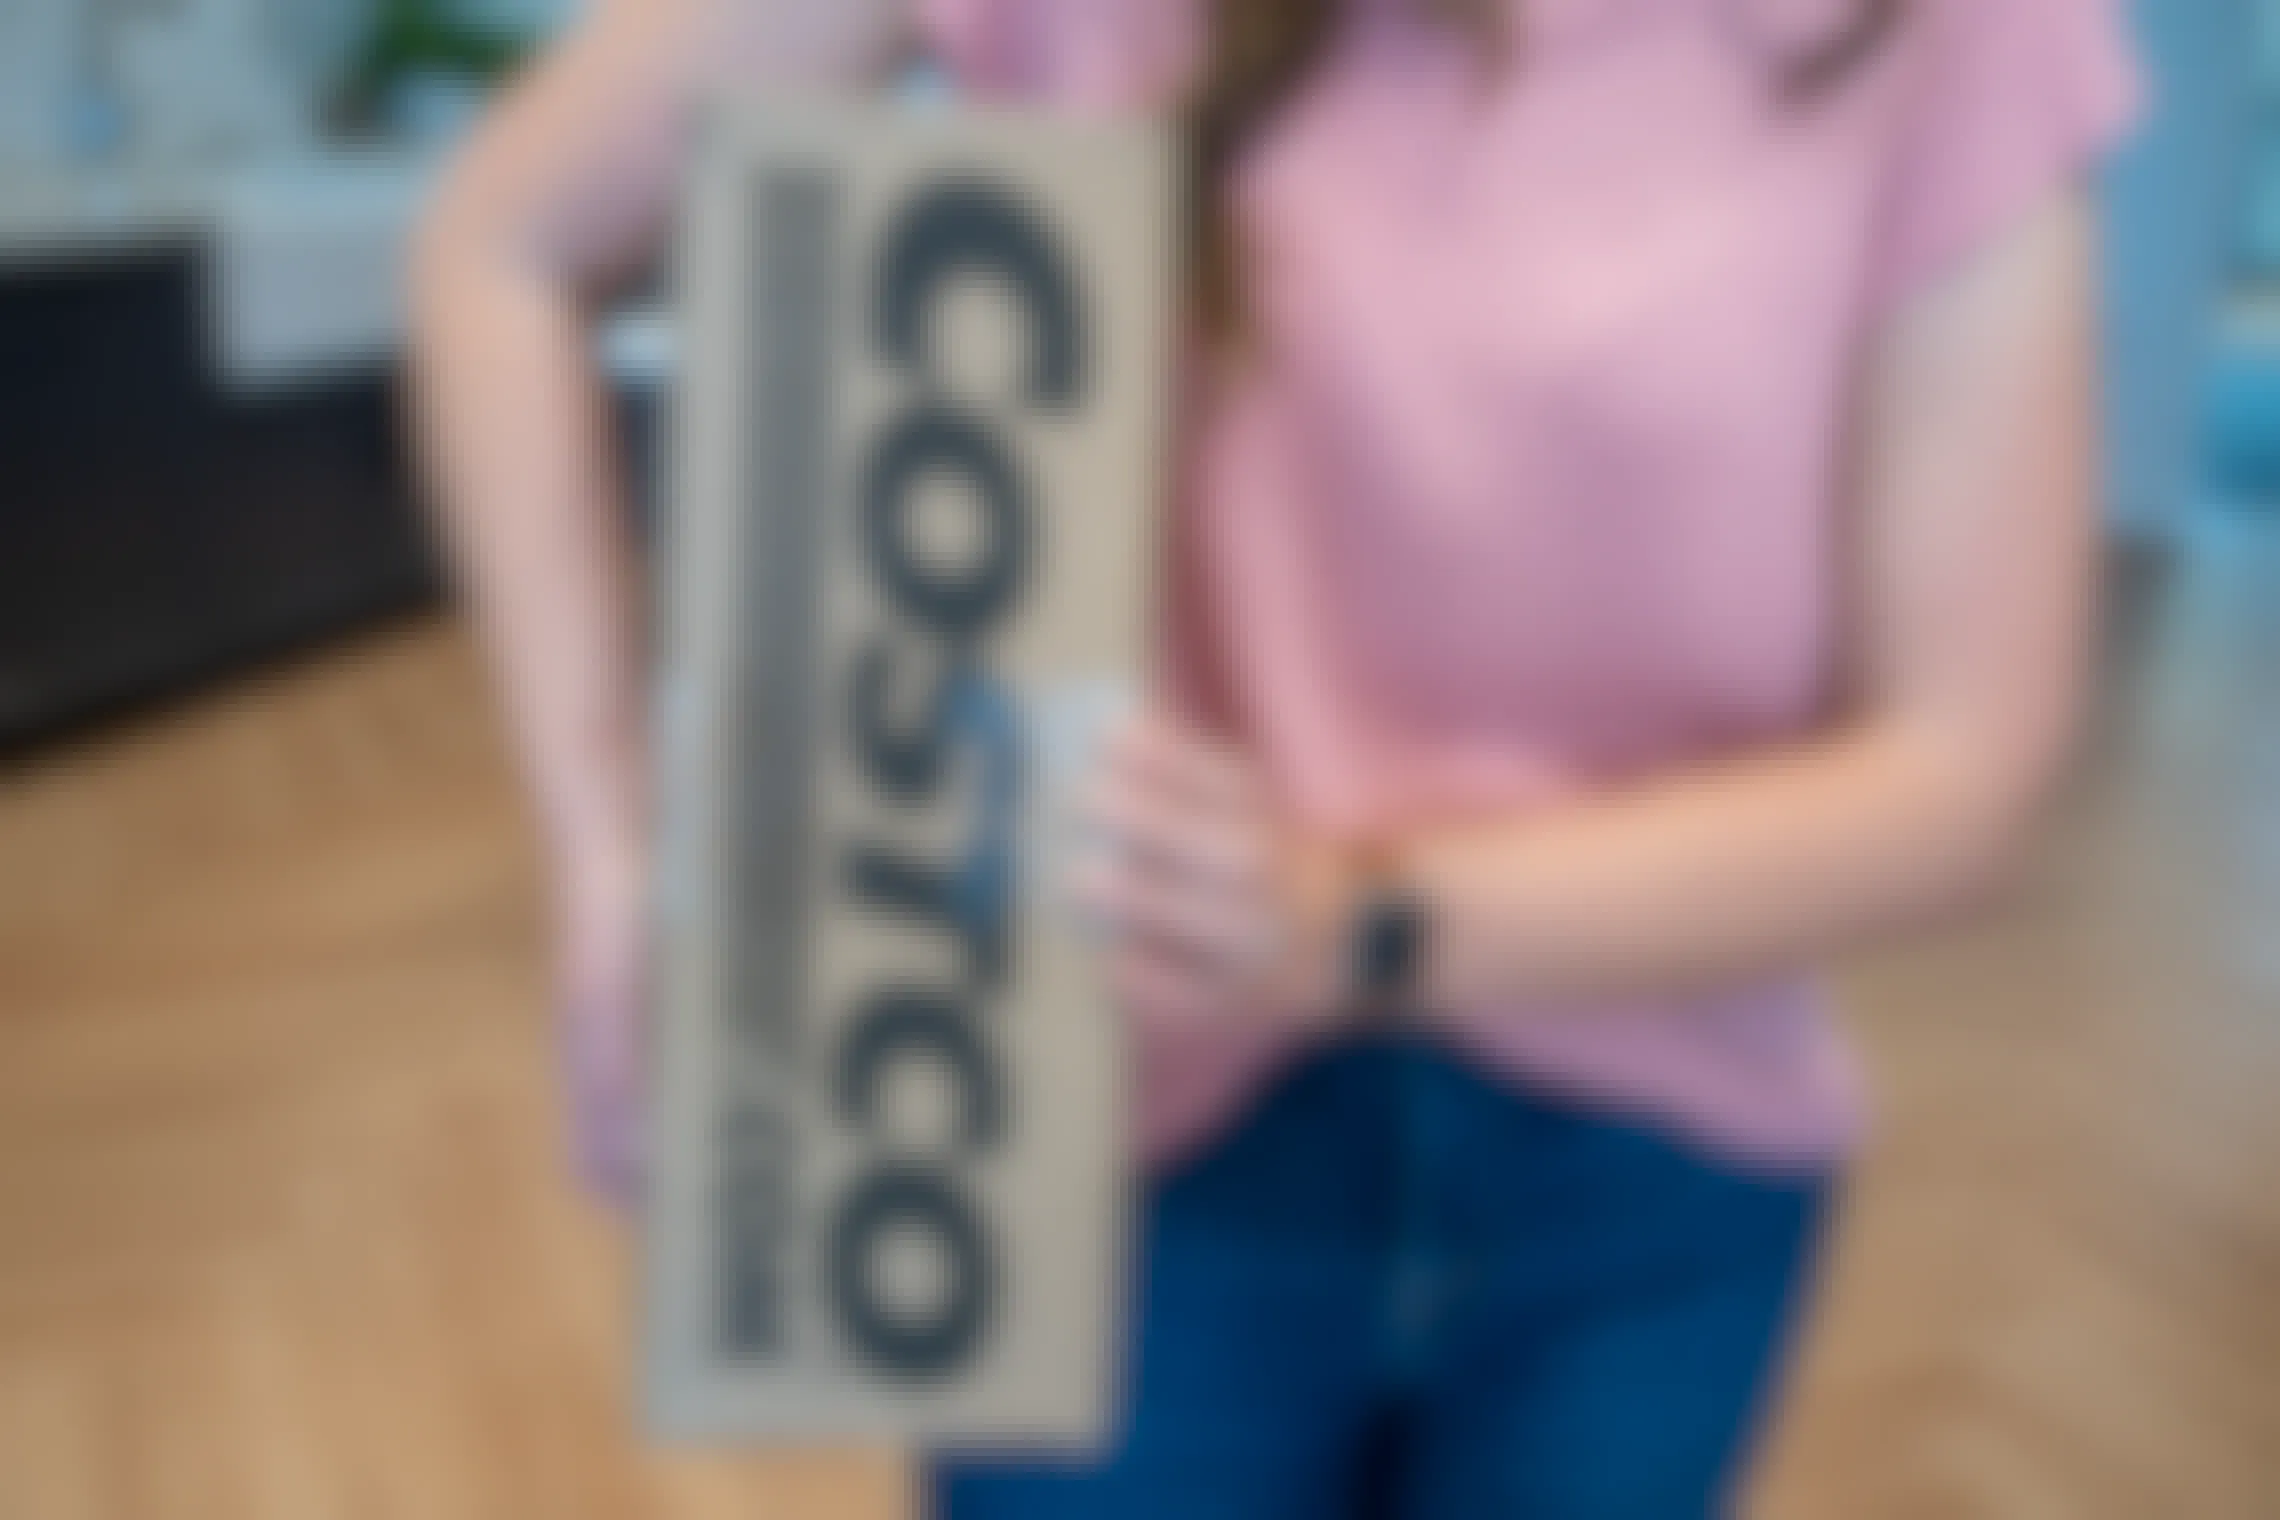 A person holding a Costco.com online order box.